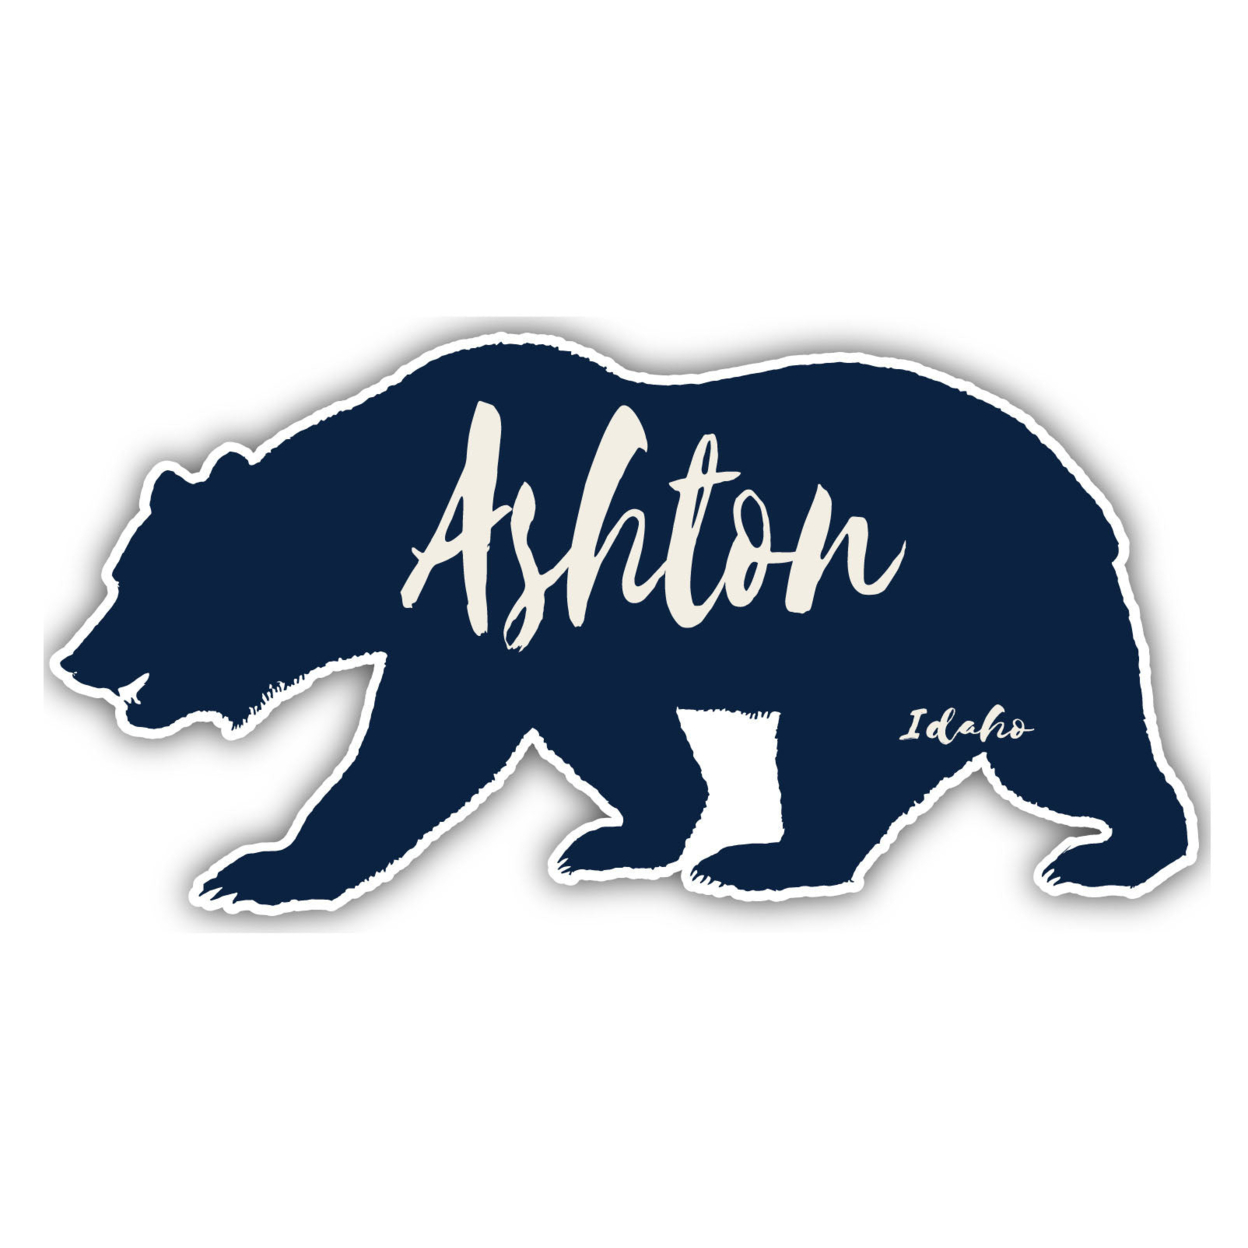 Ashton Idaho Souvenir Decorative Stickers (Choose Theme And Size) - 4-Pack, 10-Inch, Bear